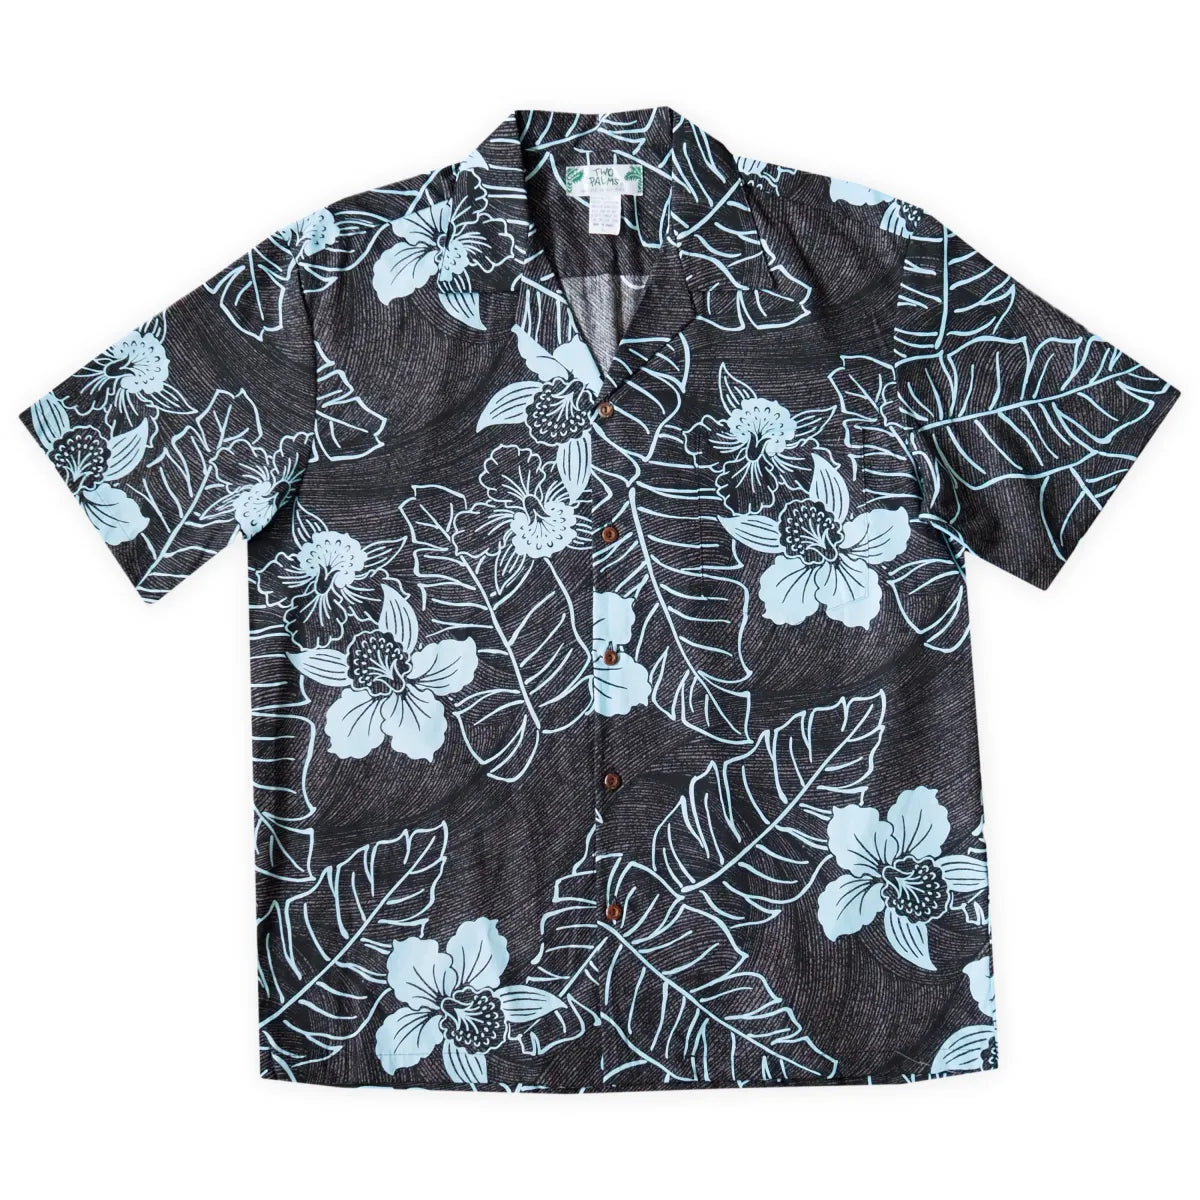 Ka’anapali black hawaiian cotton shirt